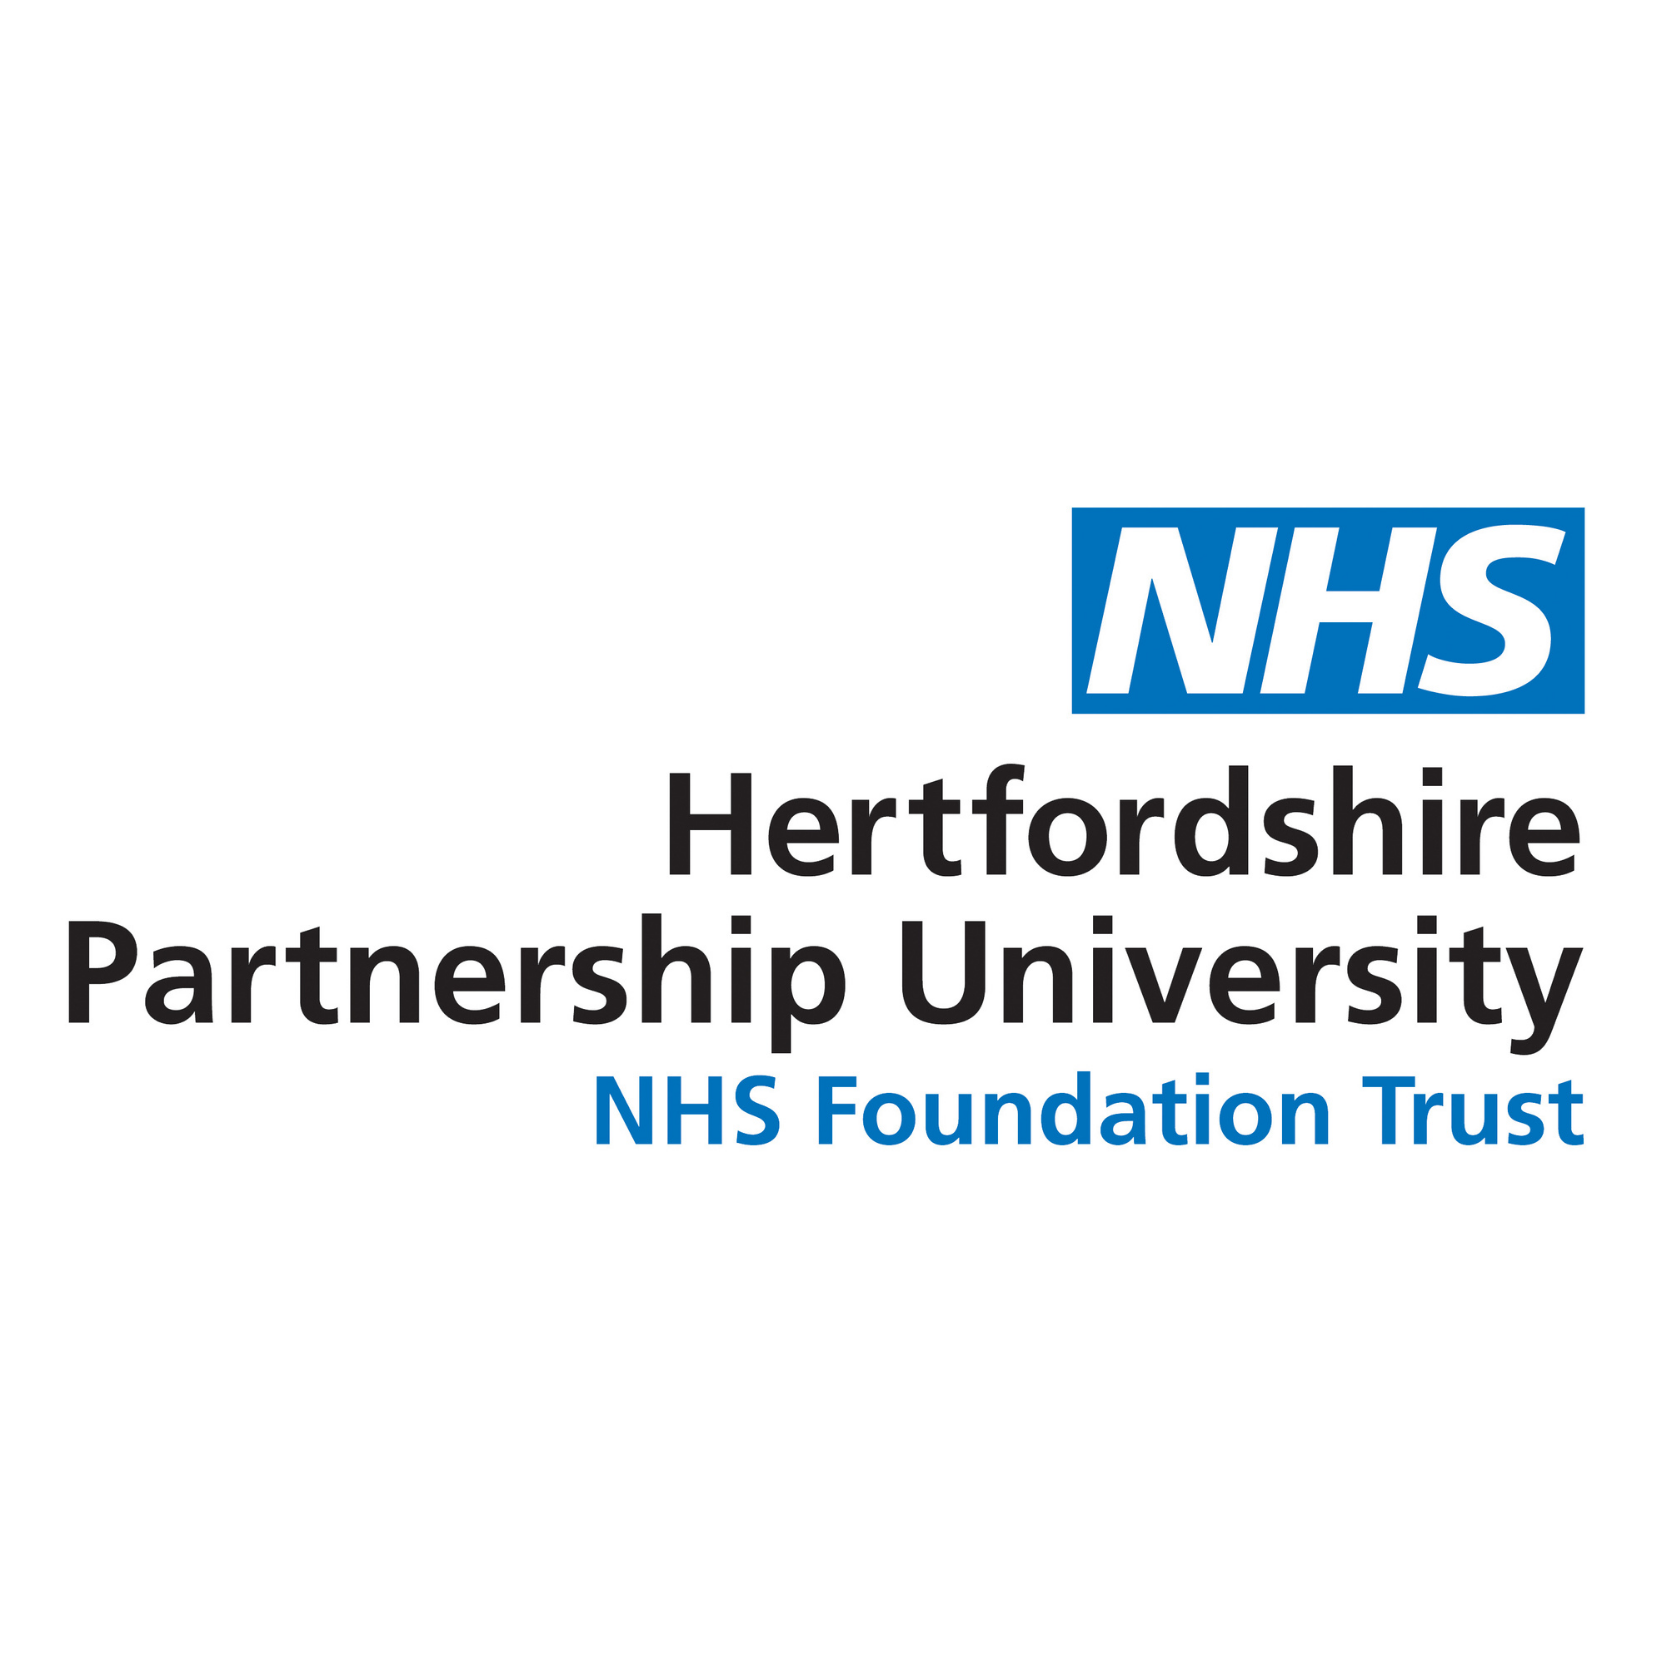 NHS Hertfordshire Partnership University Foundation Trust